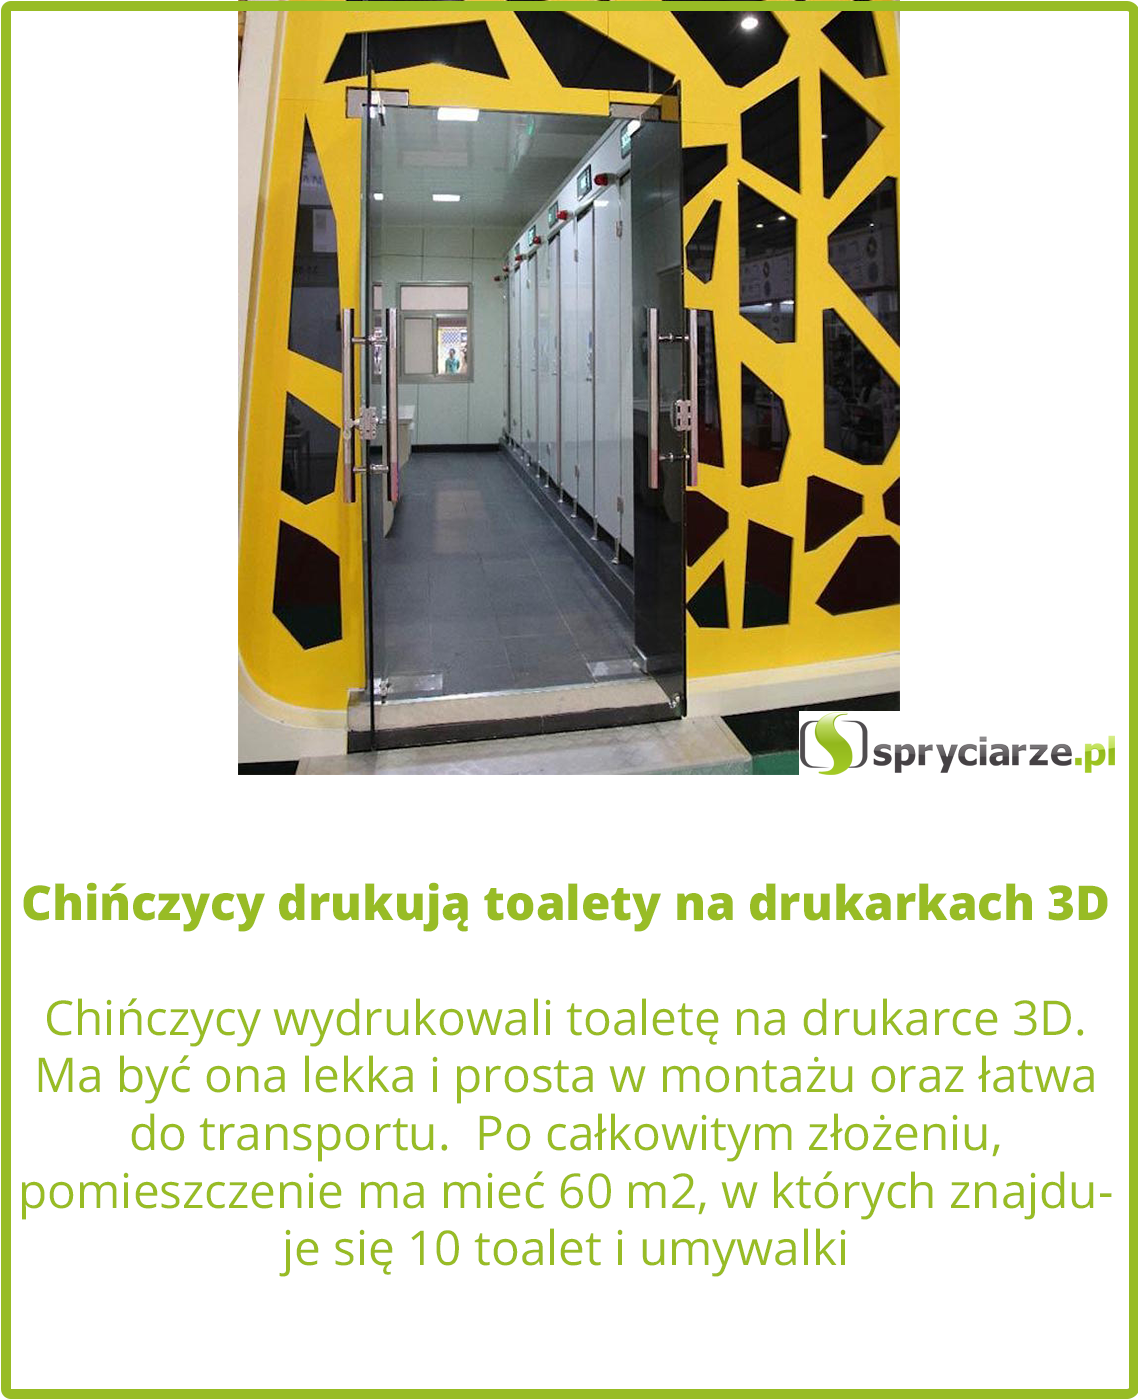 Chińczycy drukują toalety na drukarkach 3D